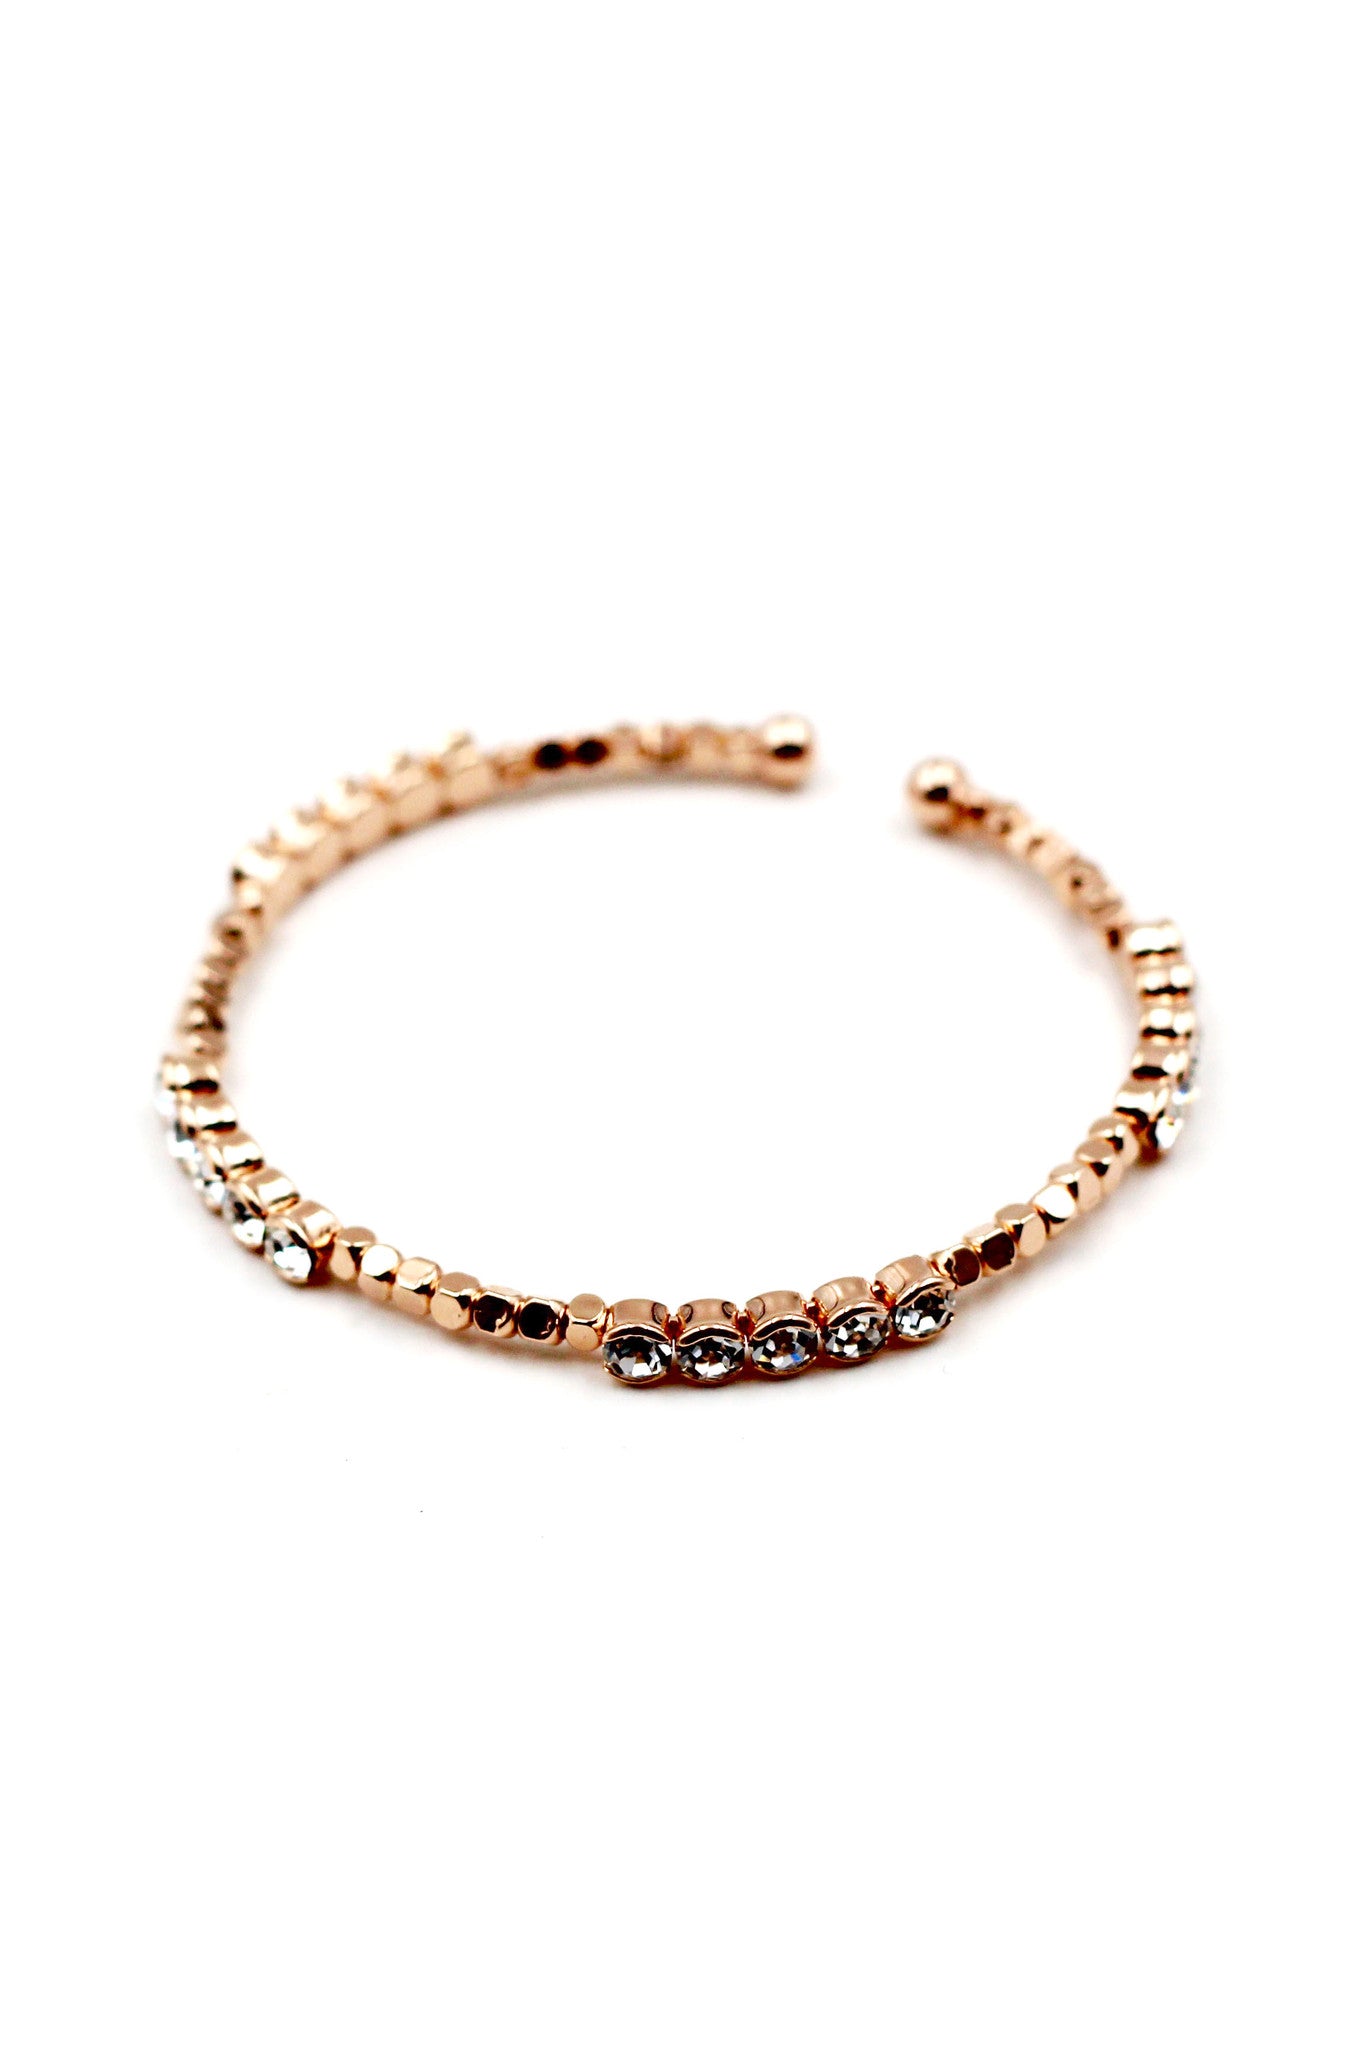 Shiny gold fashion crystal bracelet